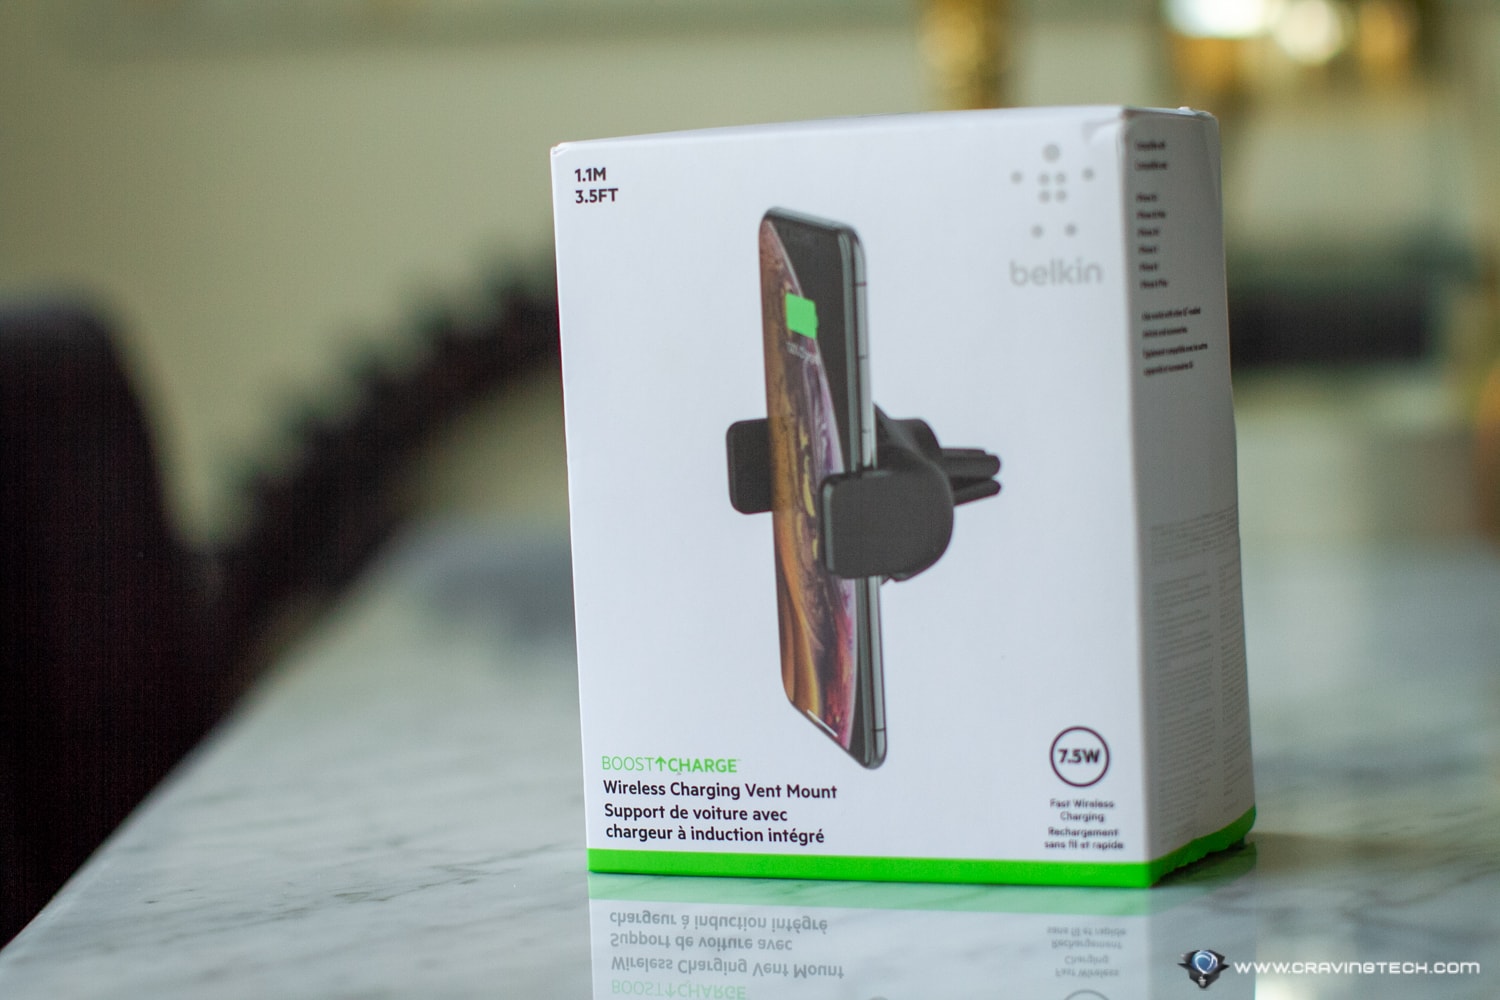 Belkin Wireless Charging Vent Mount Packaging